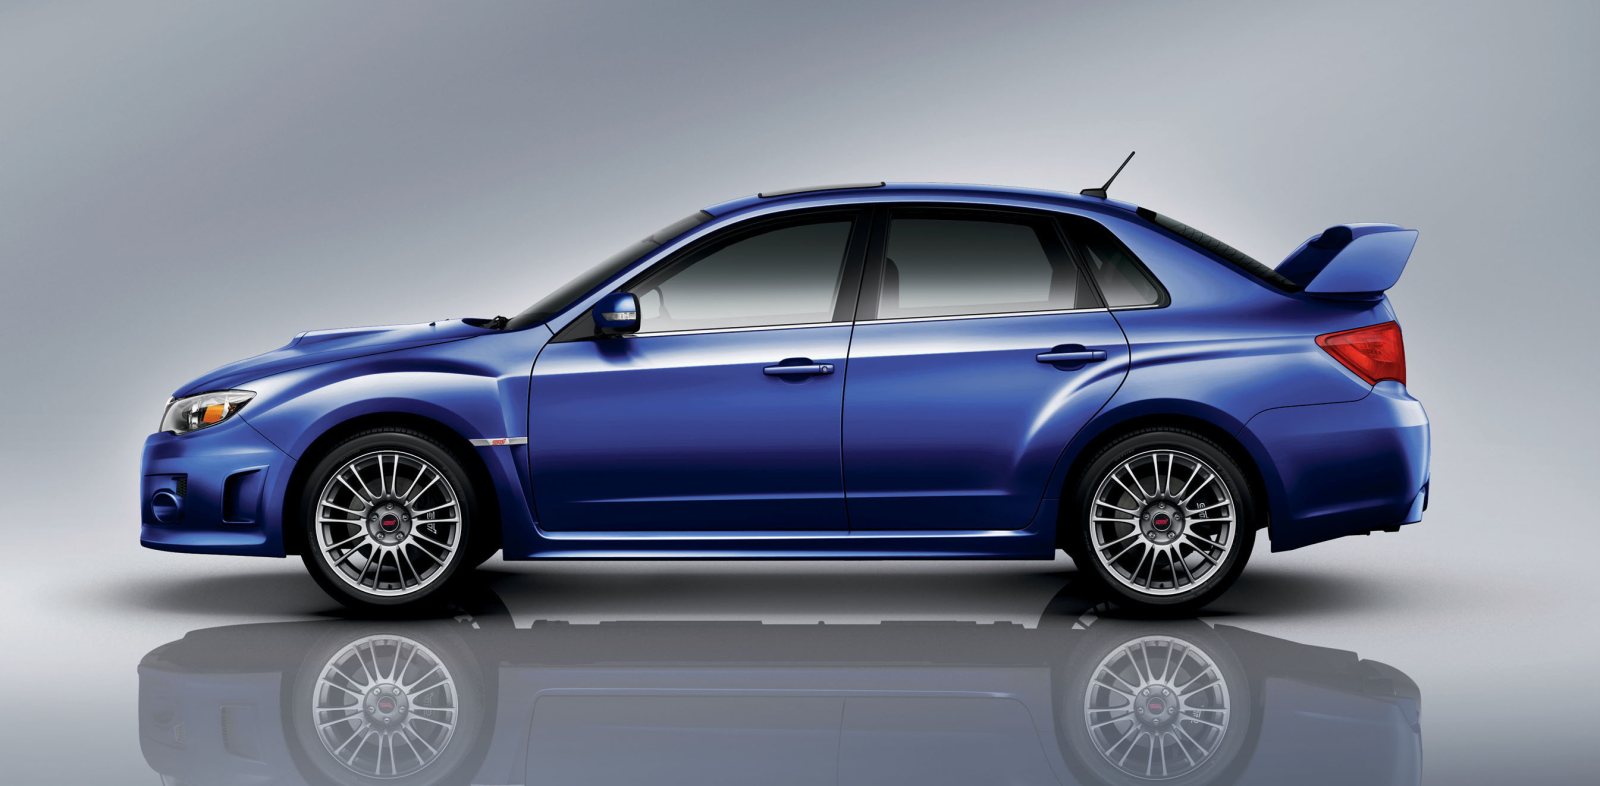 2011 Subaru Impreza WRX STI Sedan The Wing Is Back